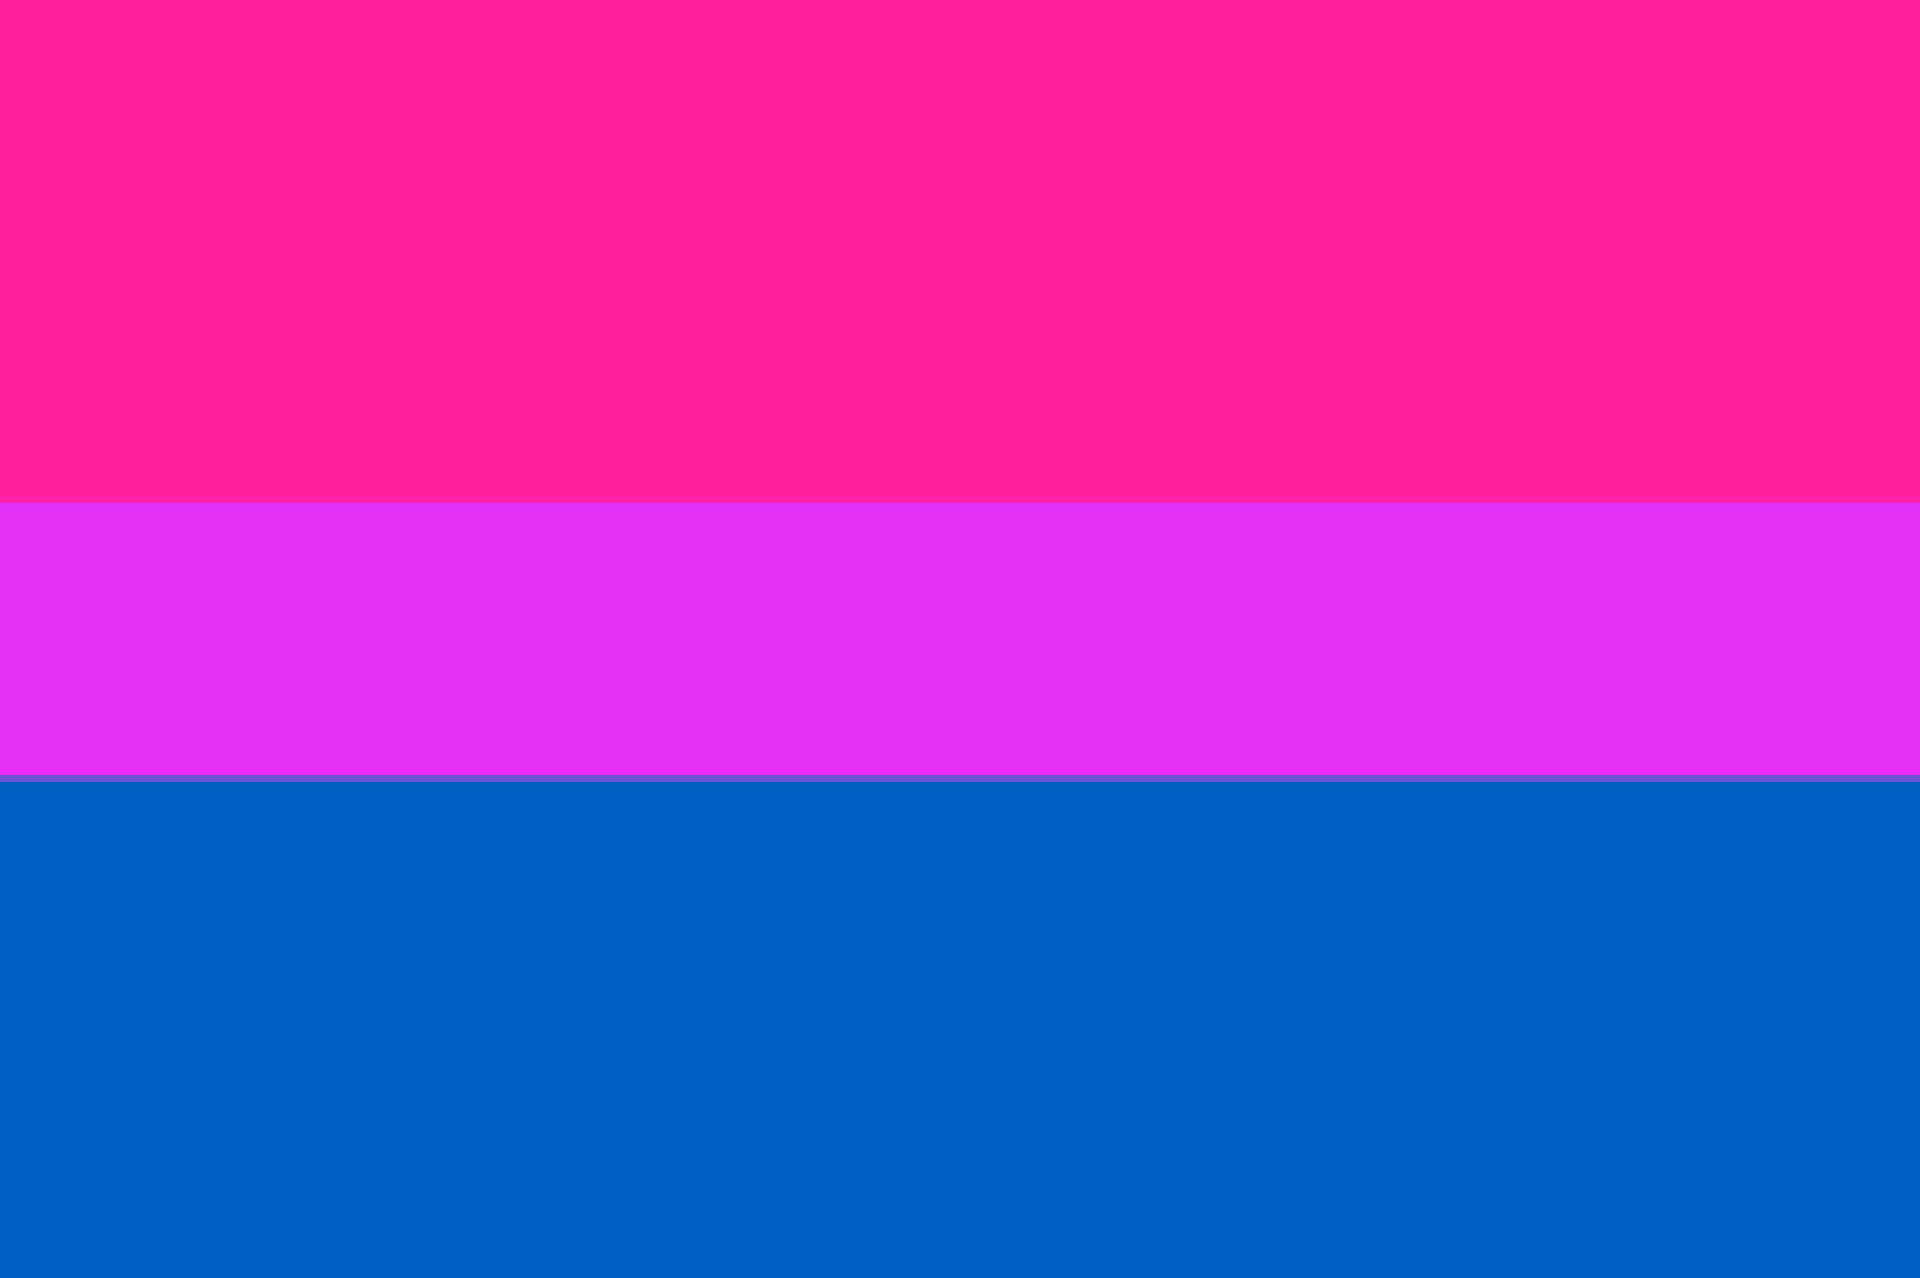 Bandera bisexual (Banderas LGBT+)